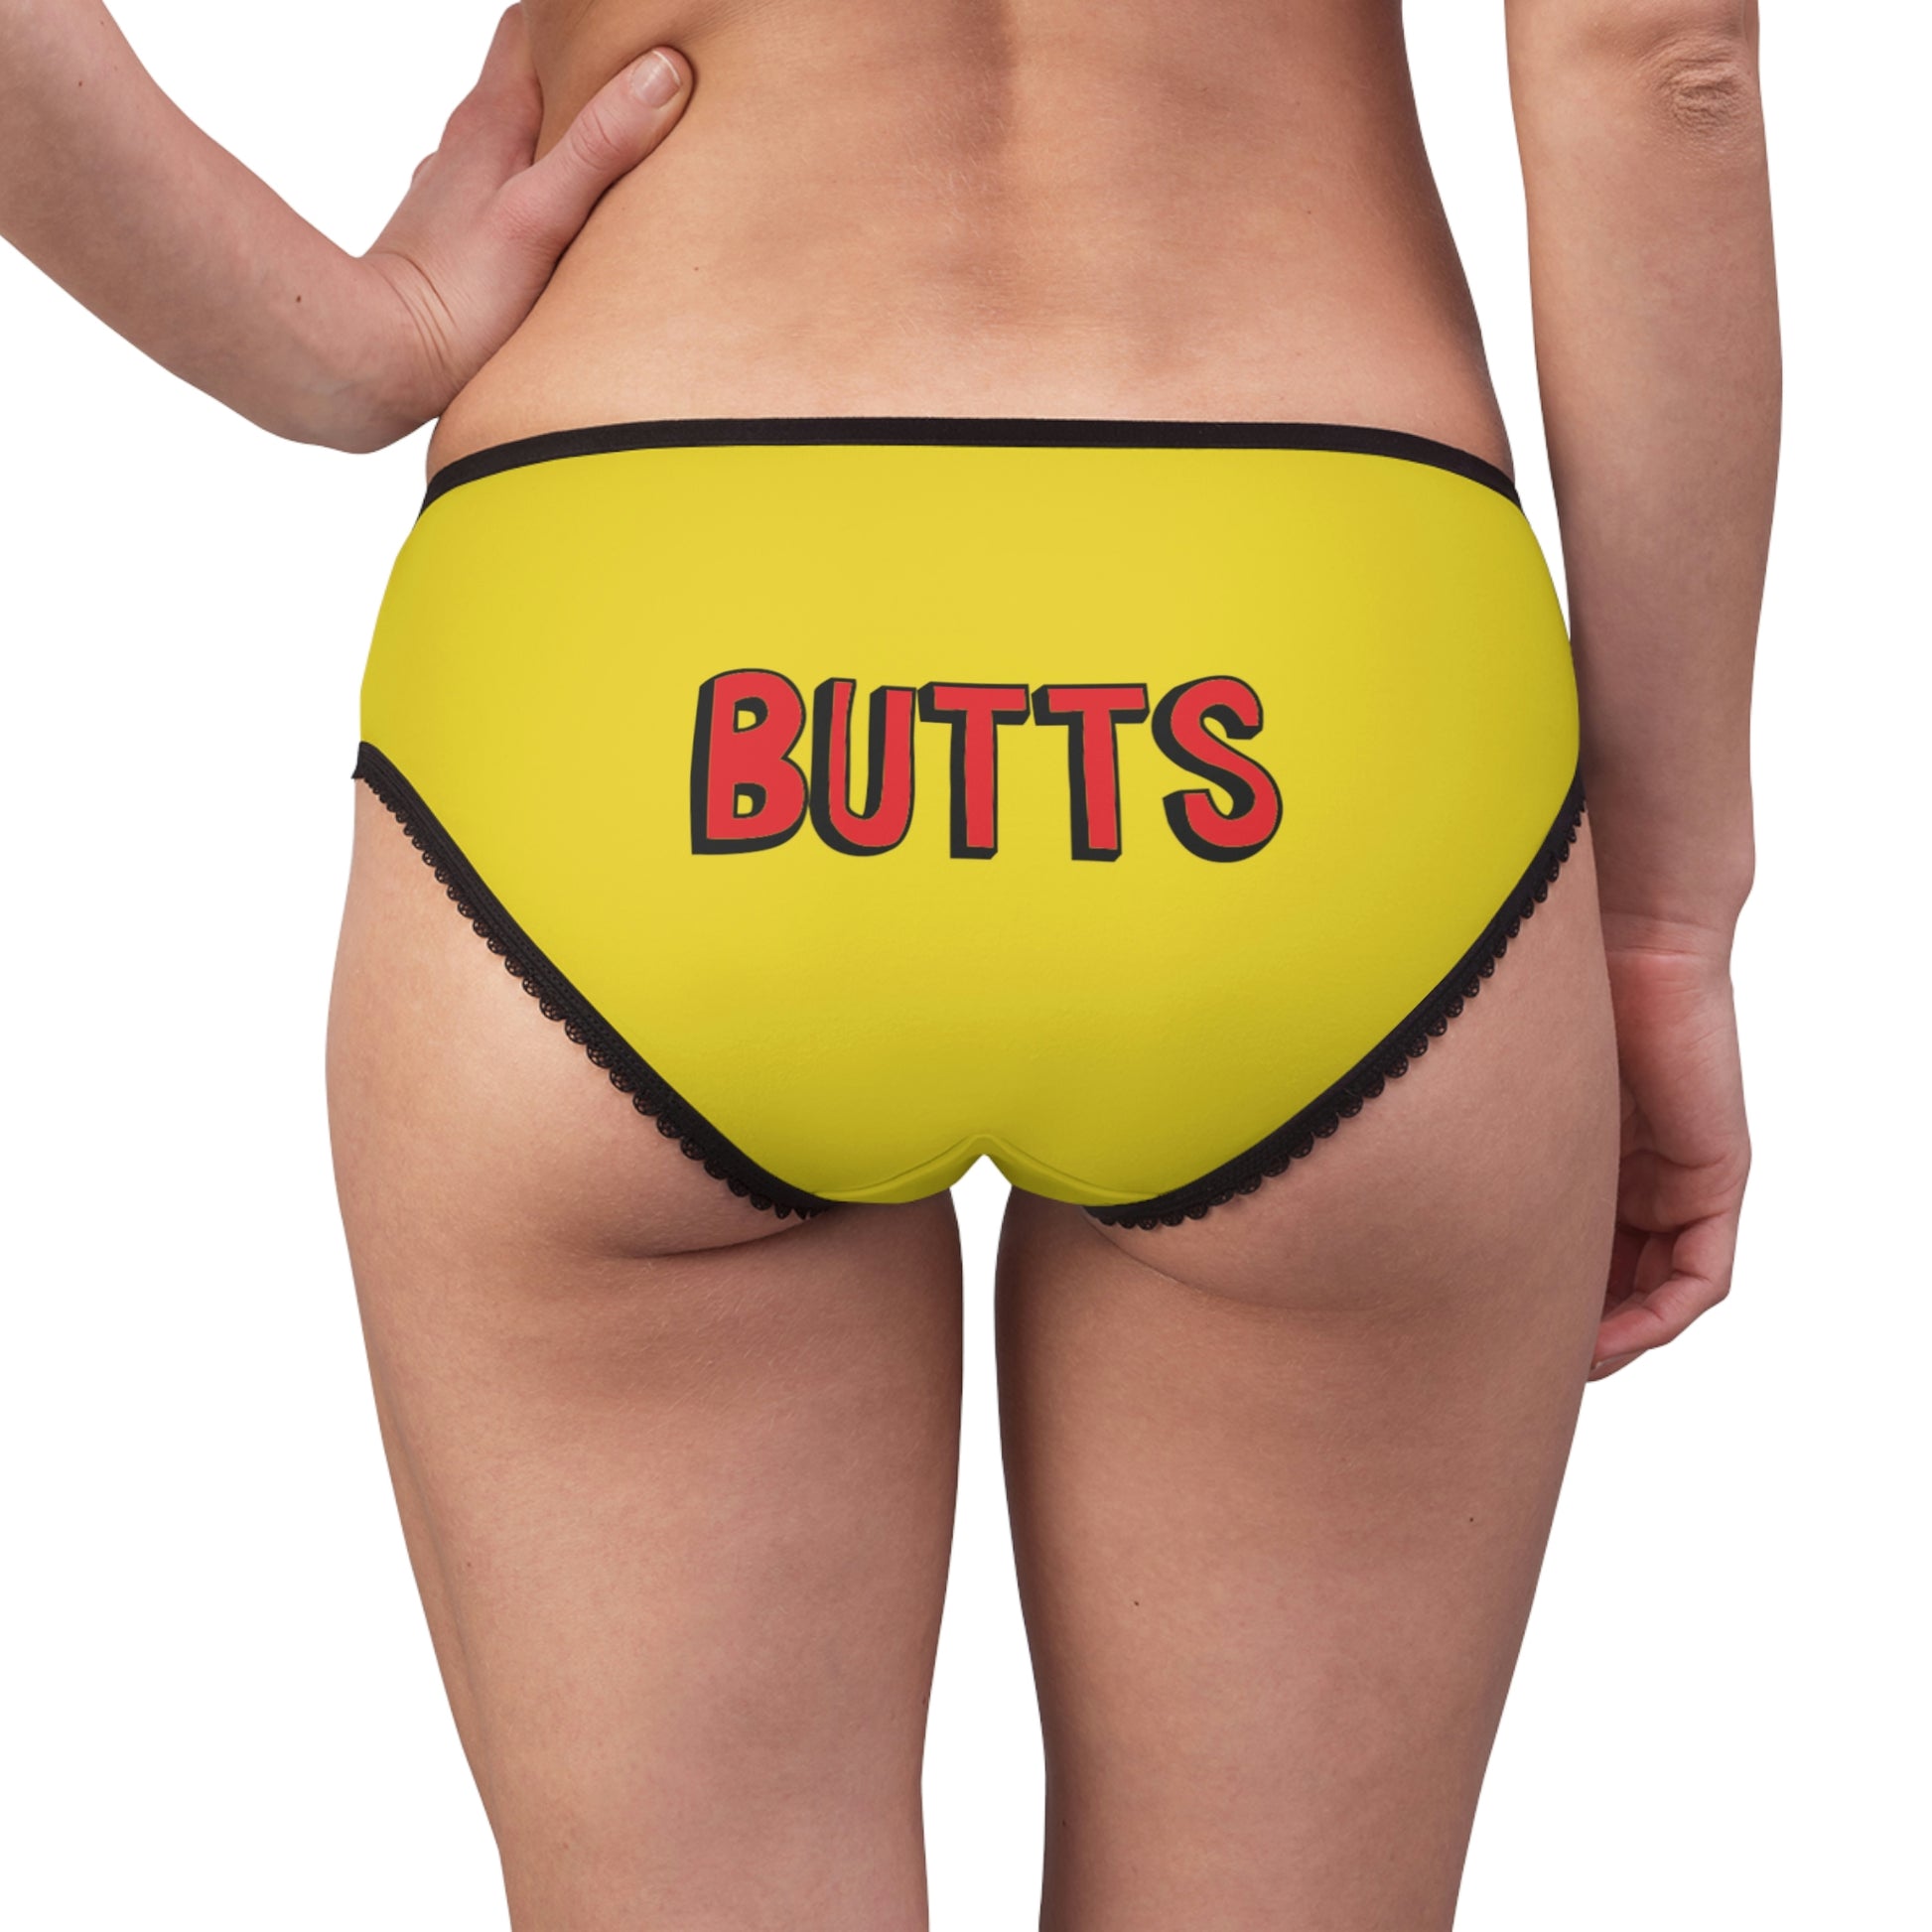 Women's Briefs - Bob's Burgers Butts - Just Like Bob Bob's Burgers